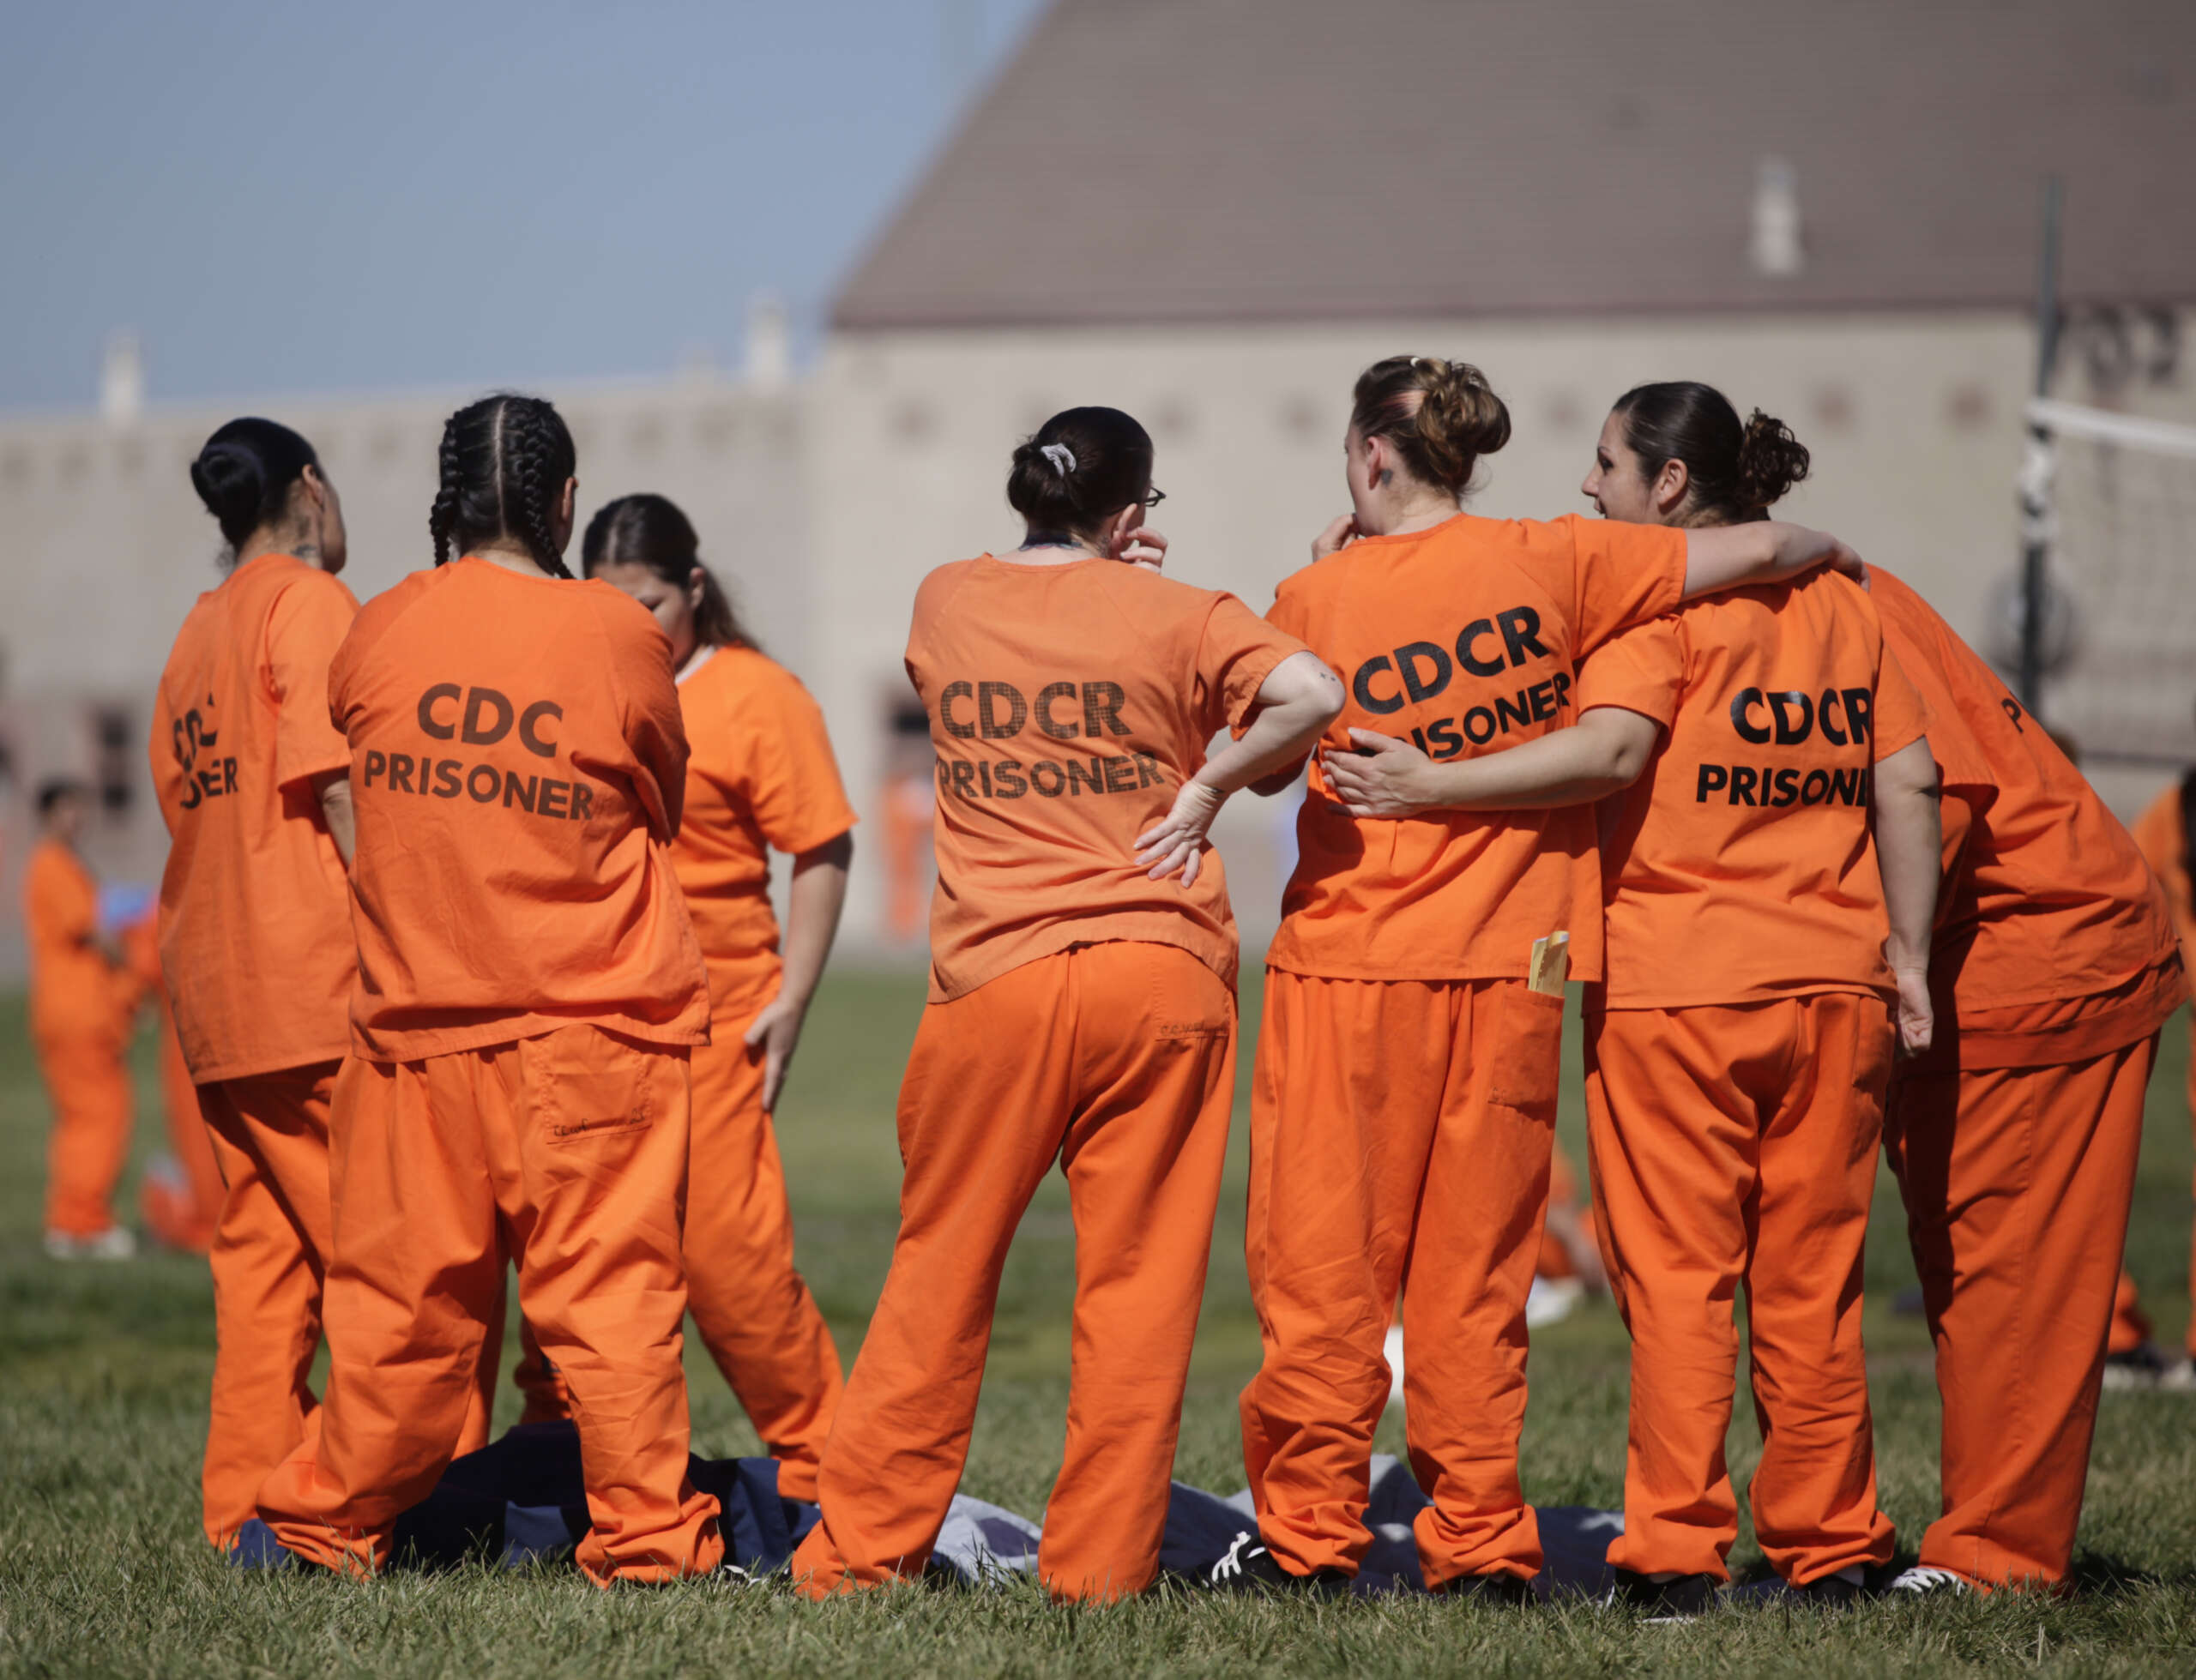 Women in prison. Форма американских заключенных оранжевая. Американская тюремная одежда. Одежда в американских тюрьмах. Тюремная одежда в Америке.